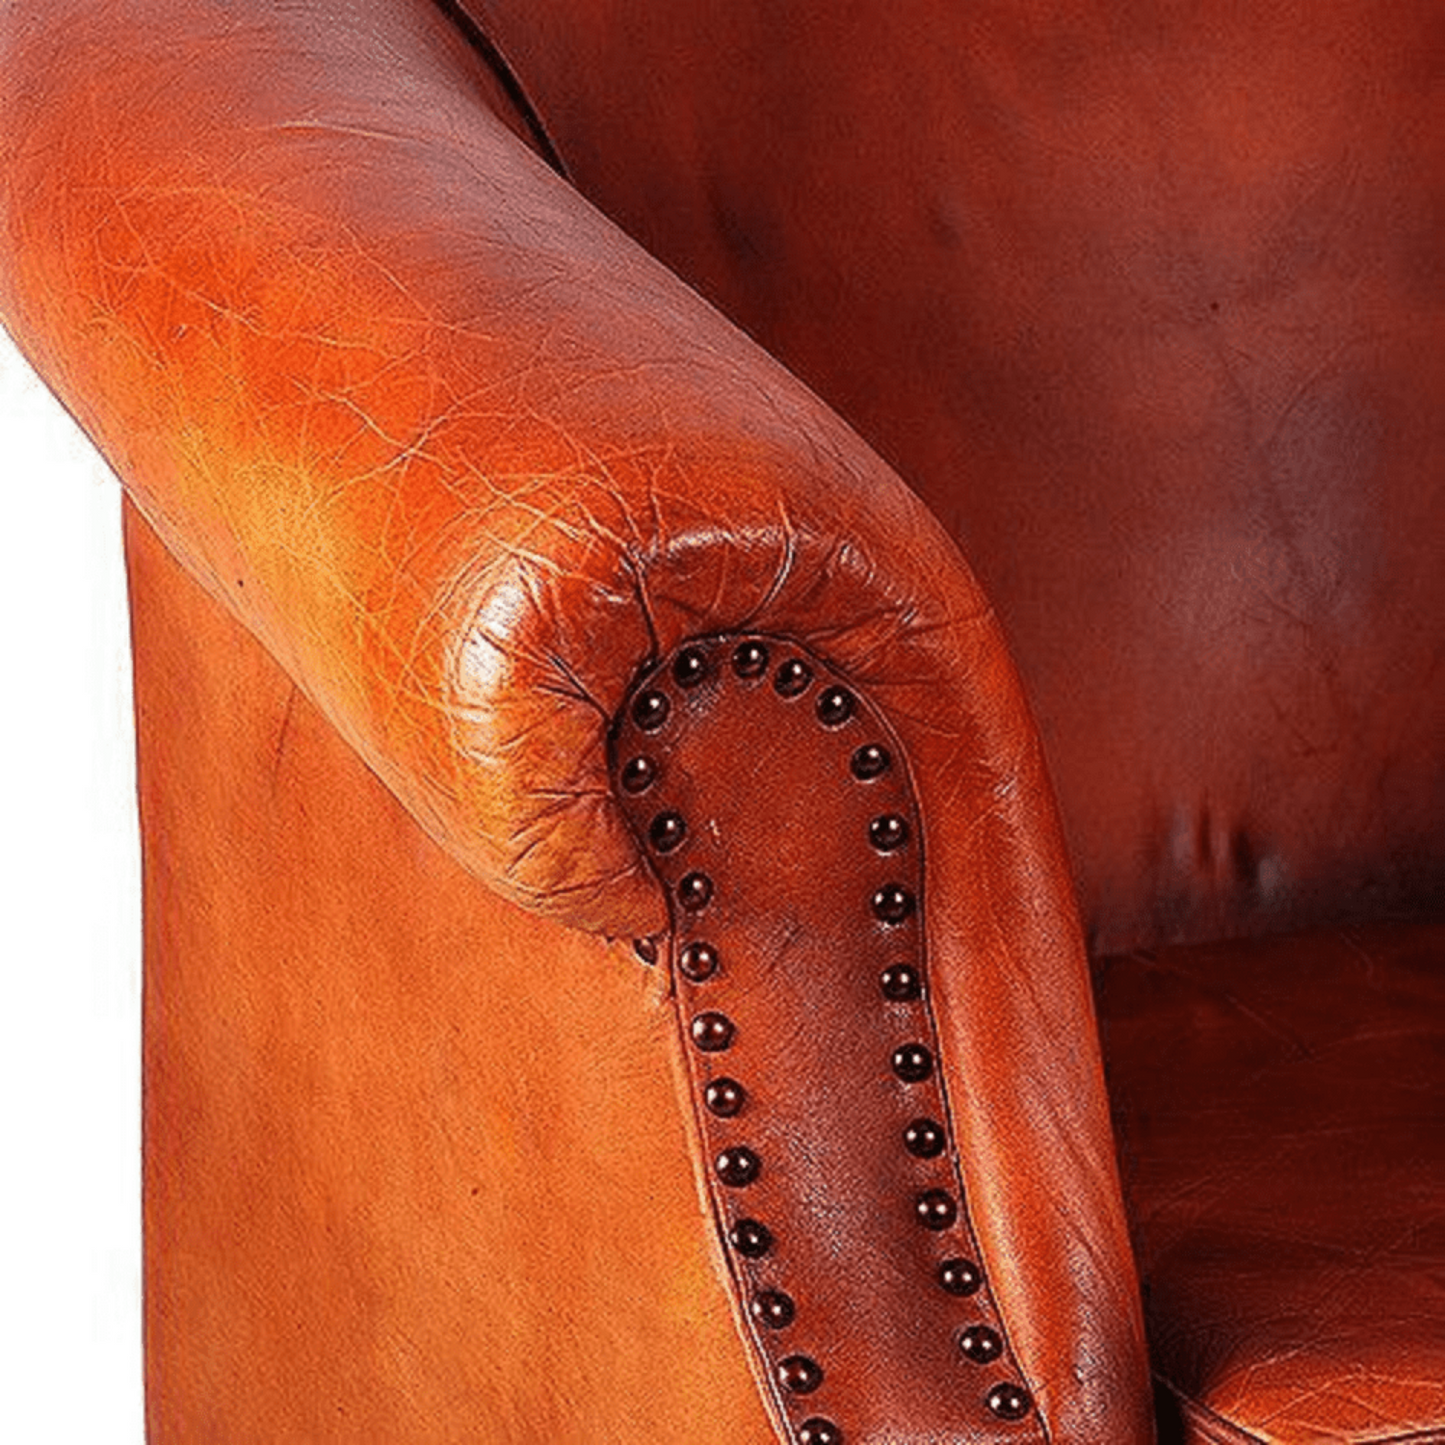 Cuero Leather Arm Chair